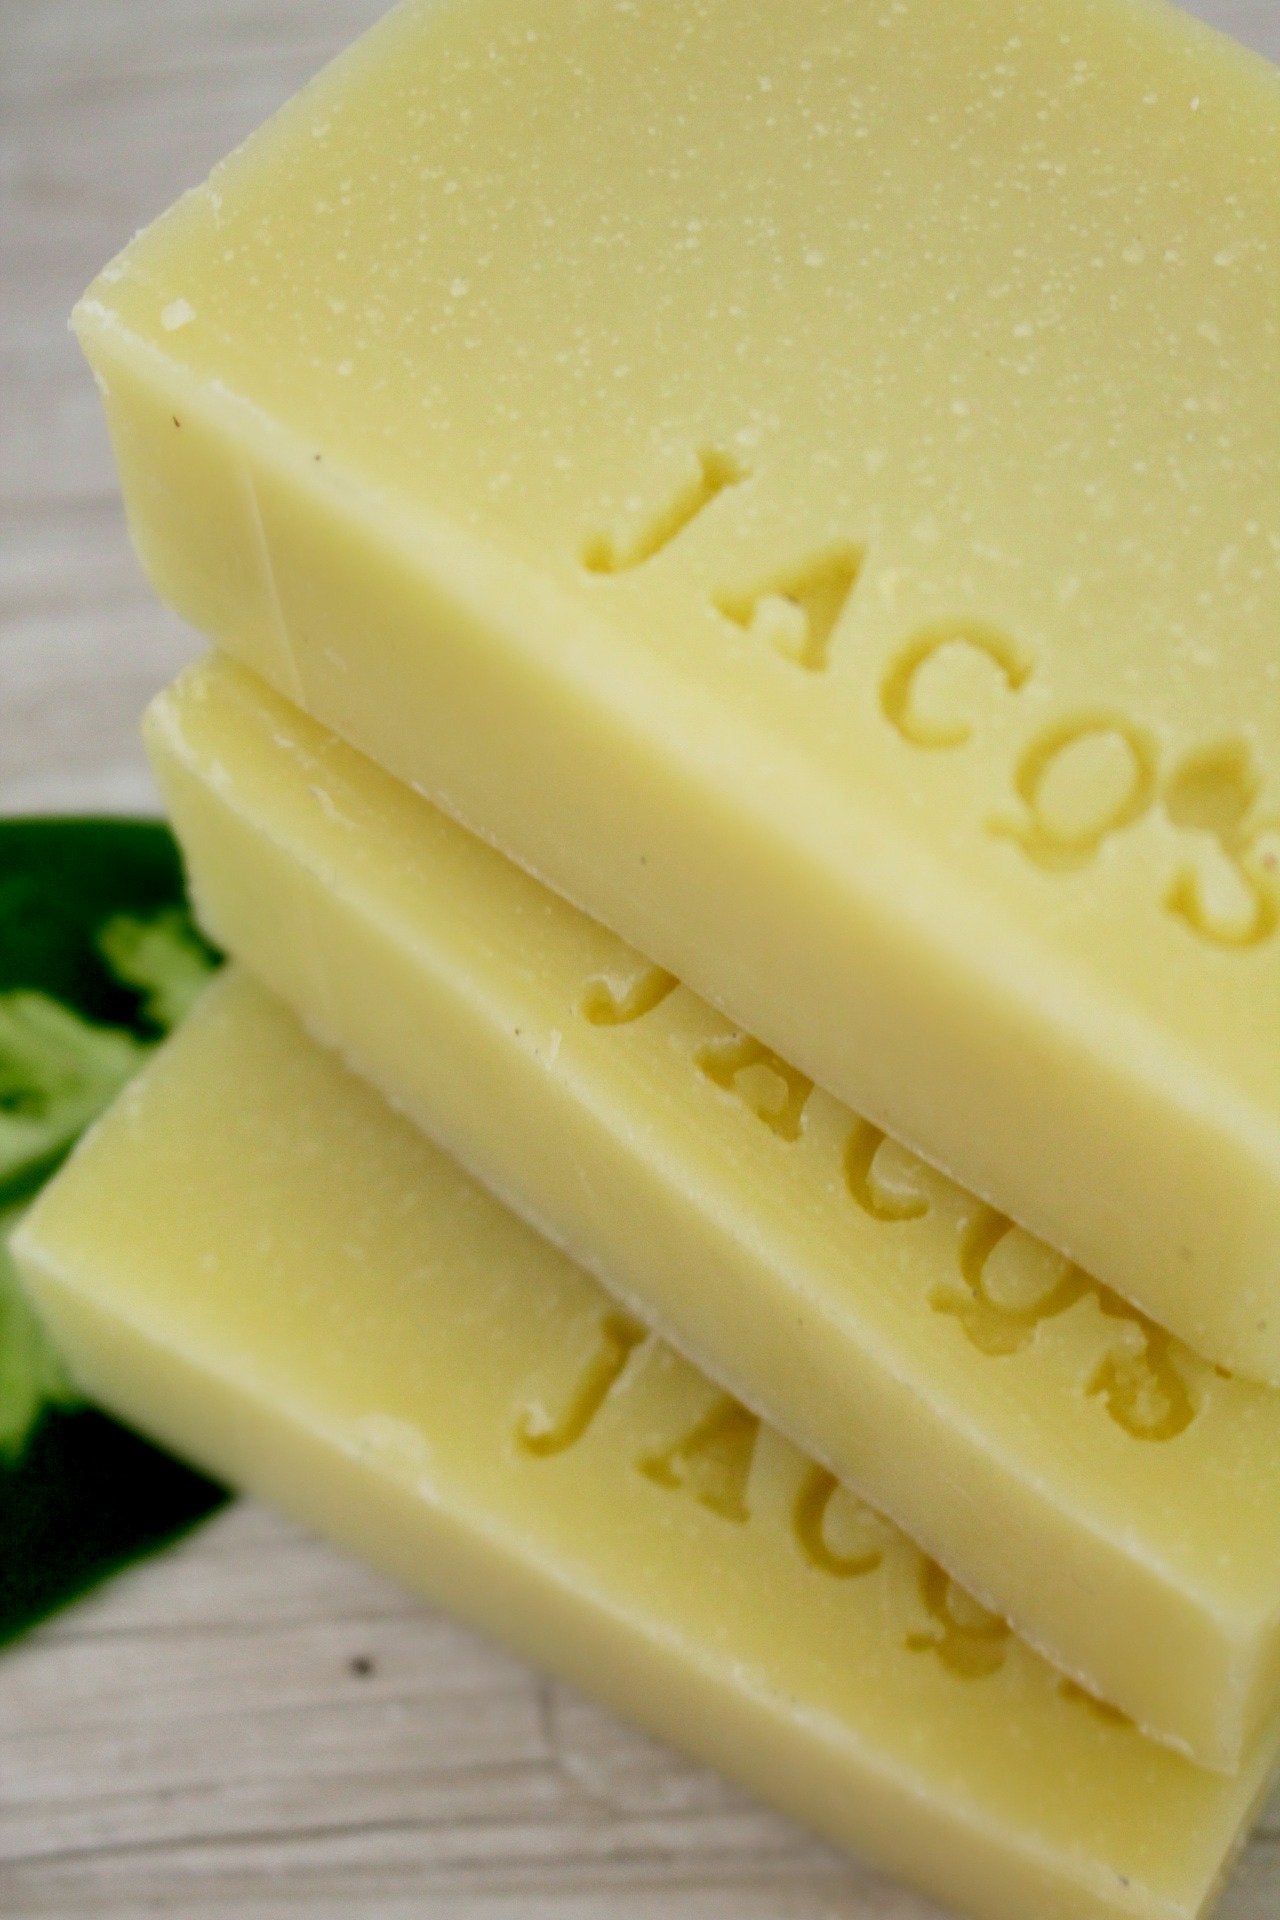 3 JACQ's organic soap bars stacked